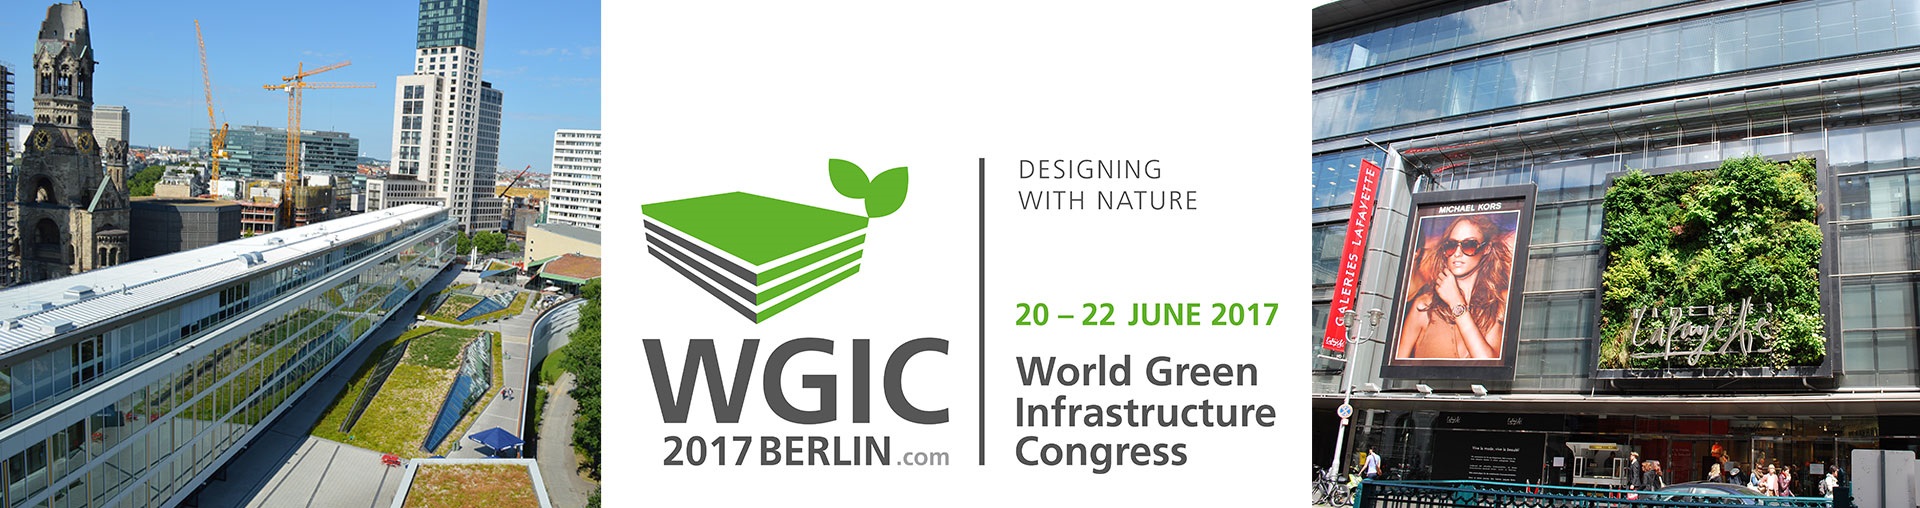 WGIC Weltkongress Gebaeudegruen Berlin KLEIN